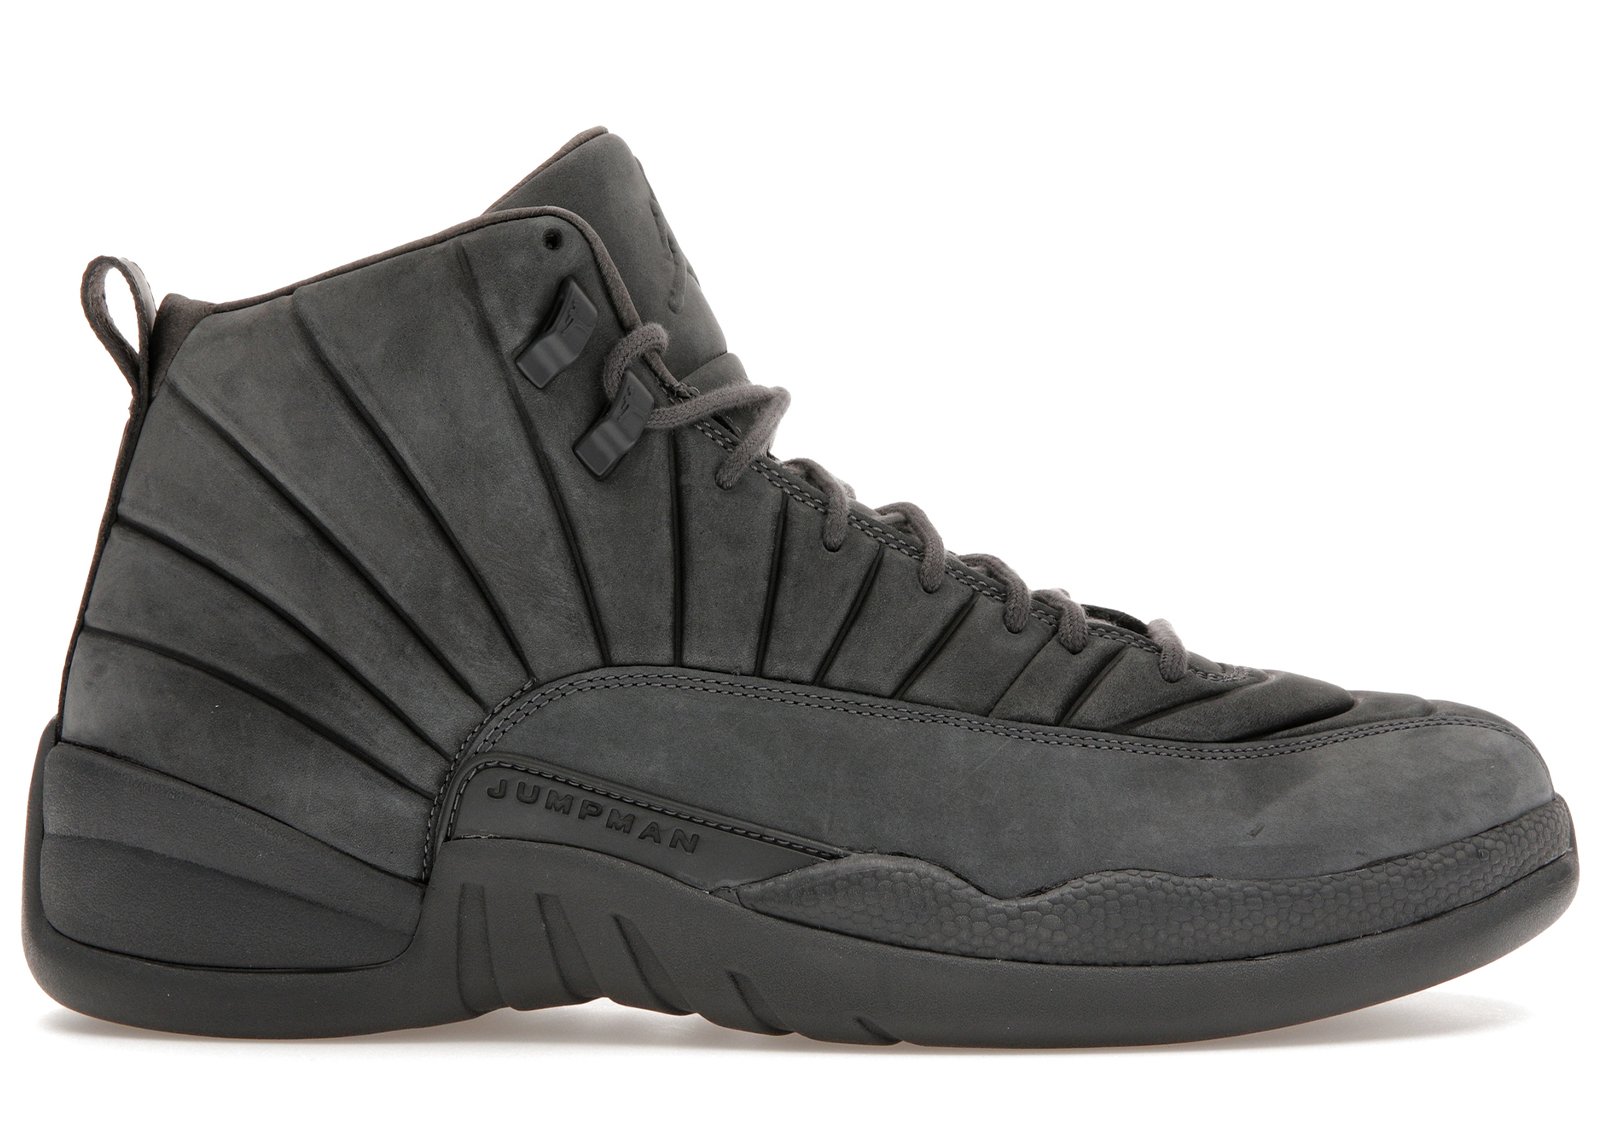 Jordan 12 Retro PSNY sneakers